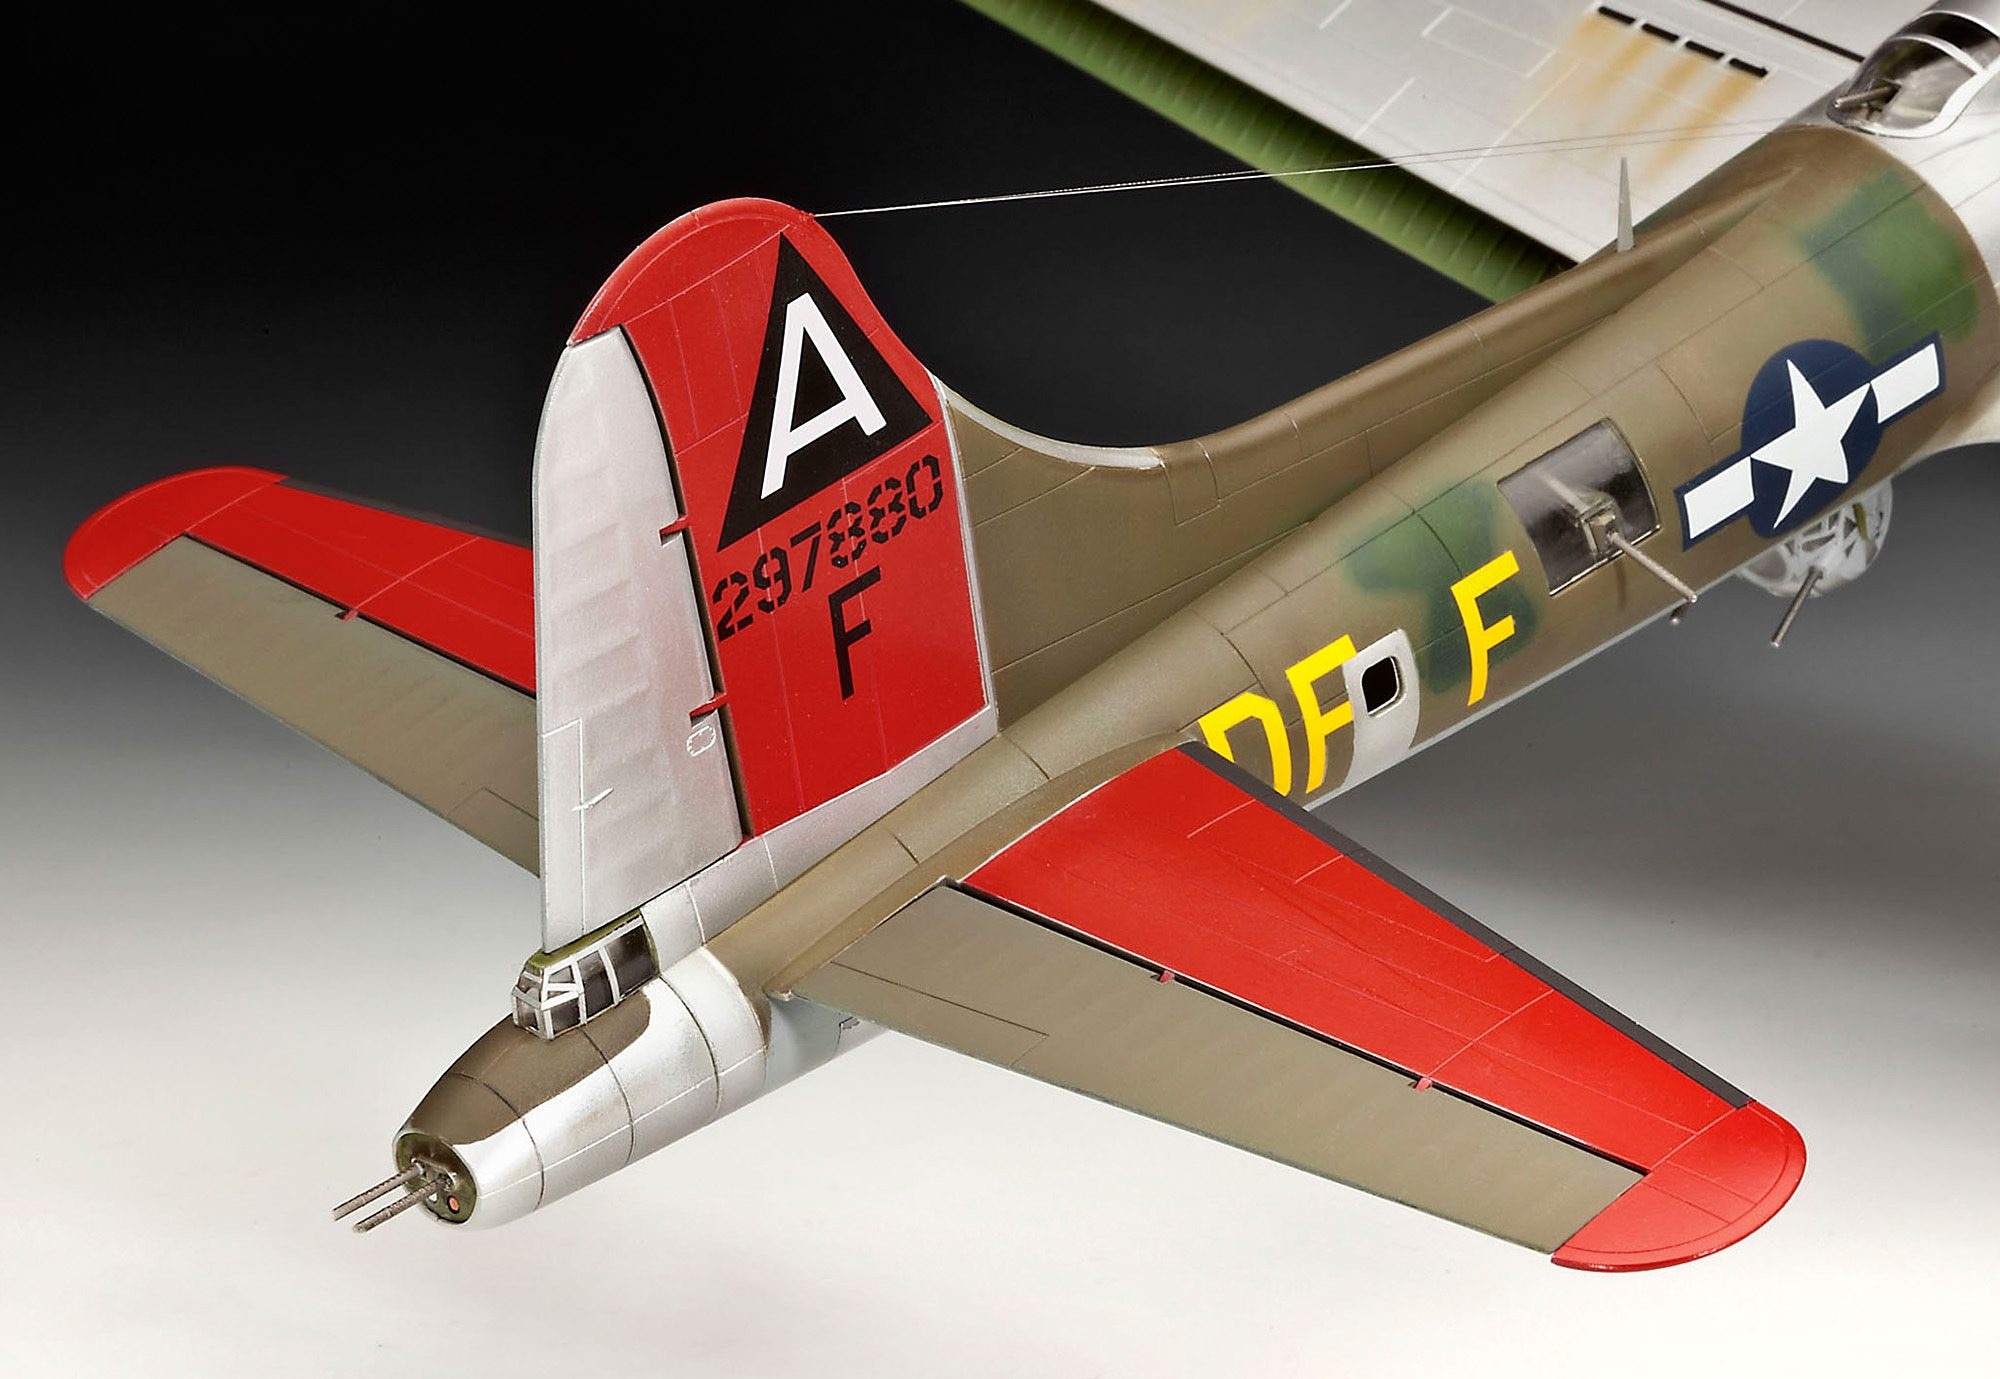 Revell® Modellbausatz »B-17G Flying Fortress«, 1:72, Made in Europe